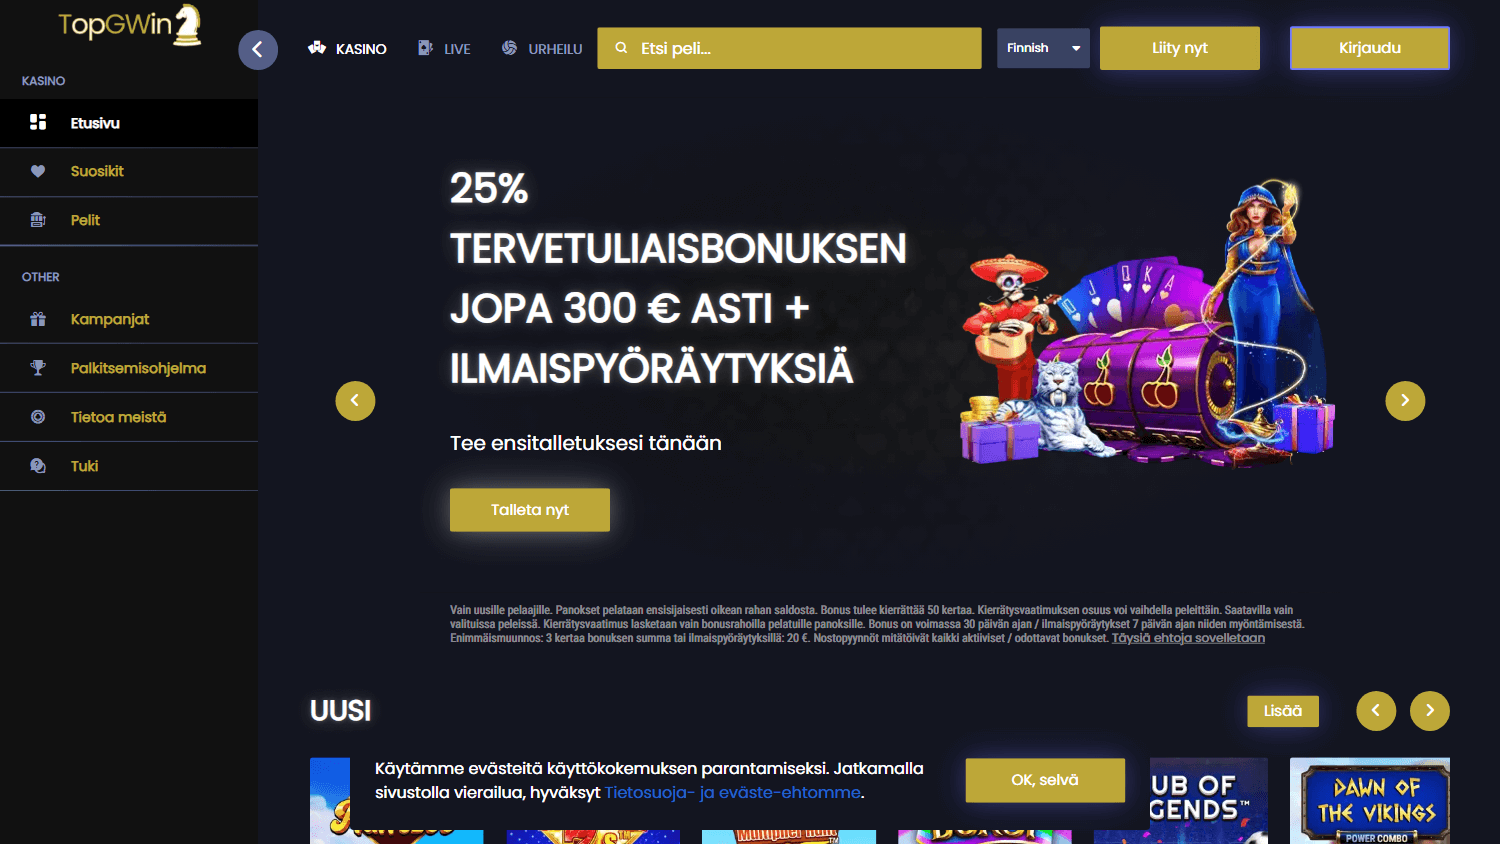 topgwin_casino_homepage_desktop